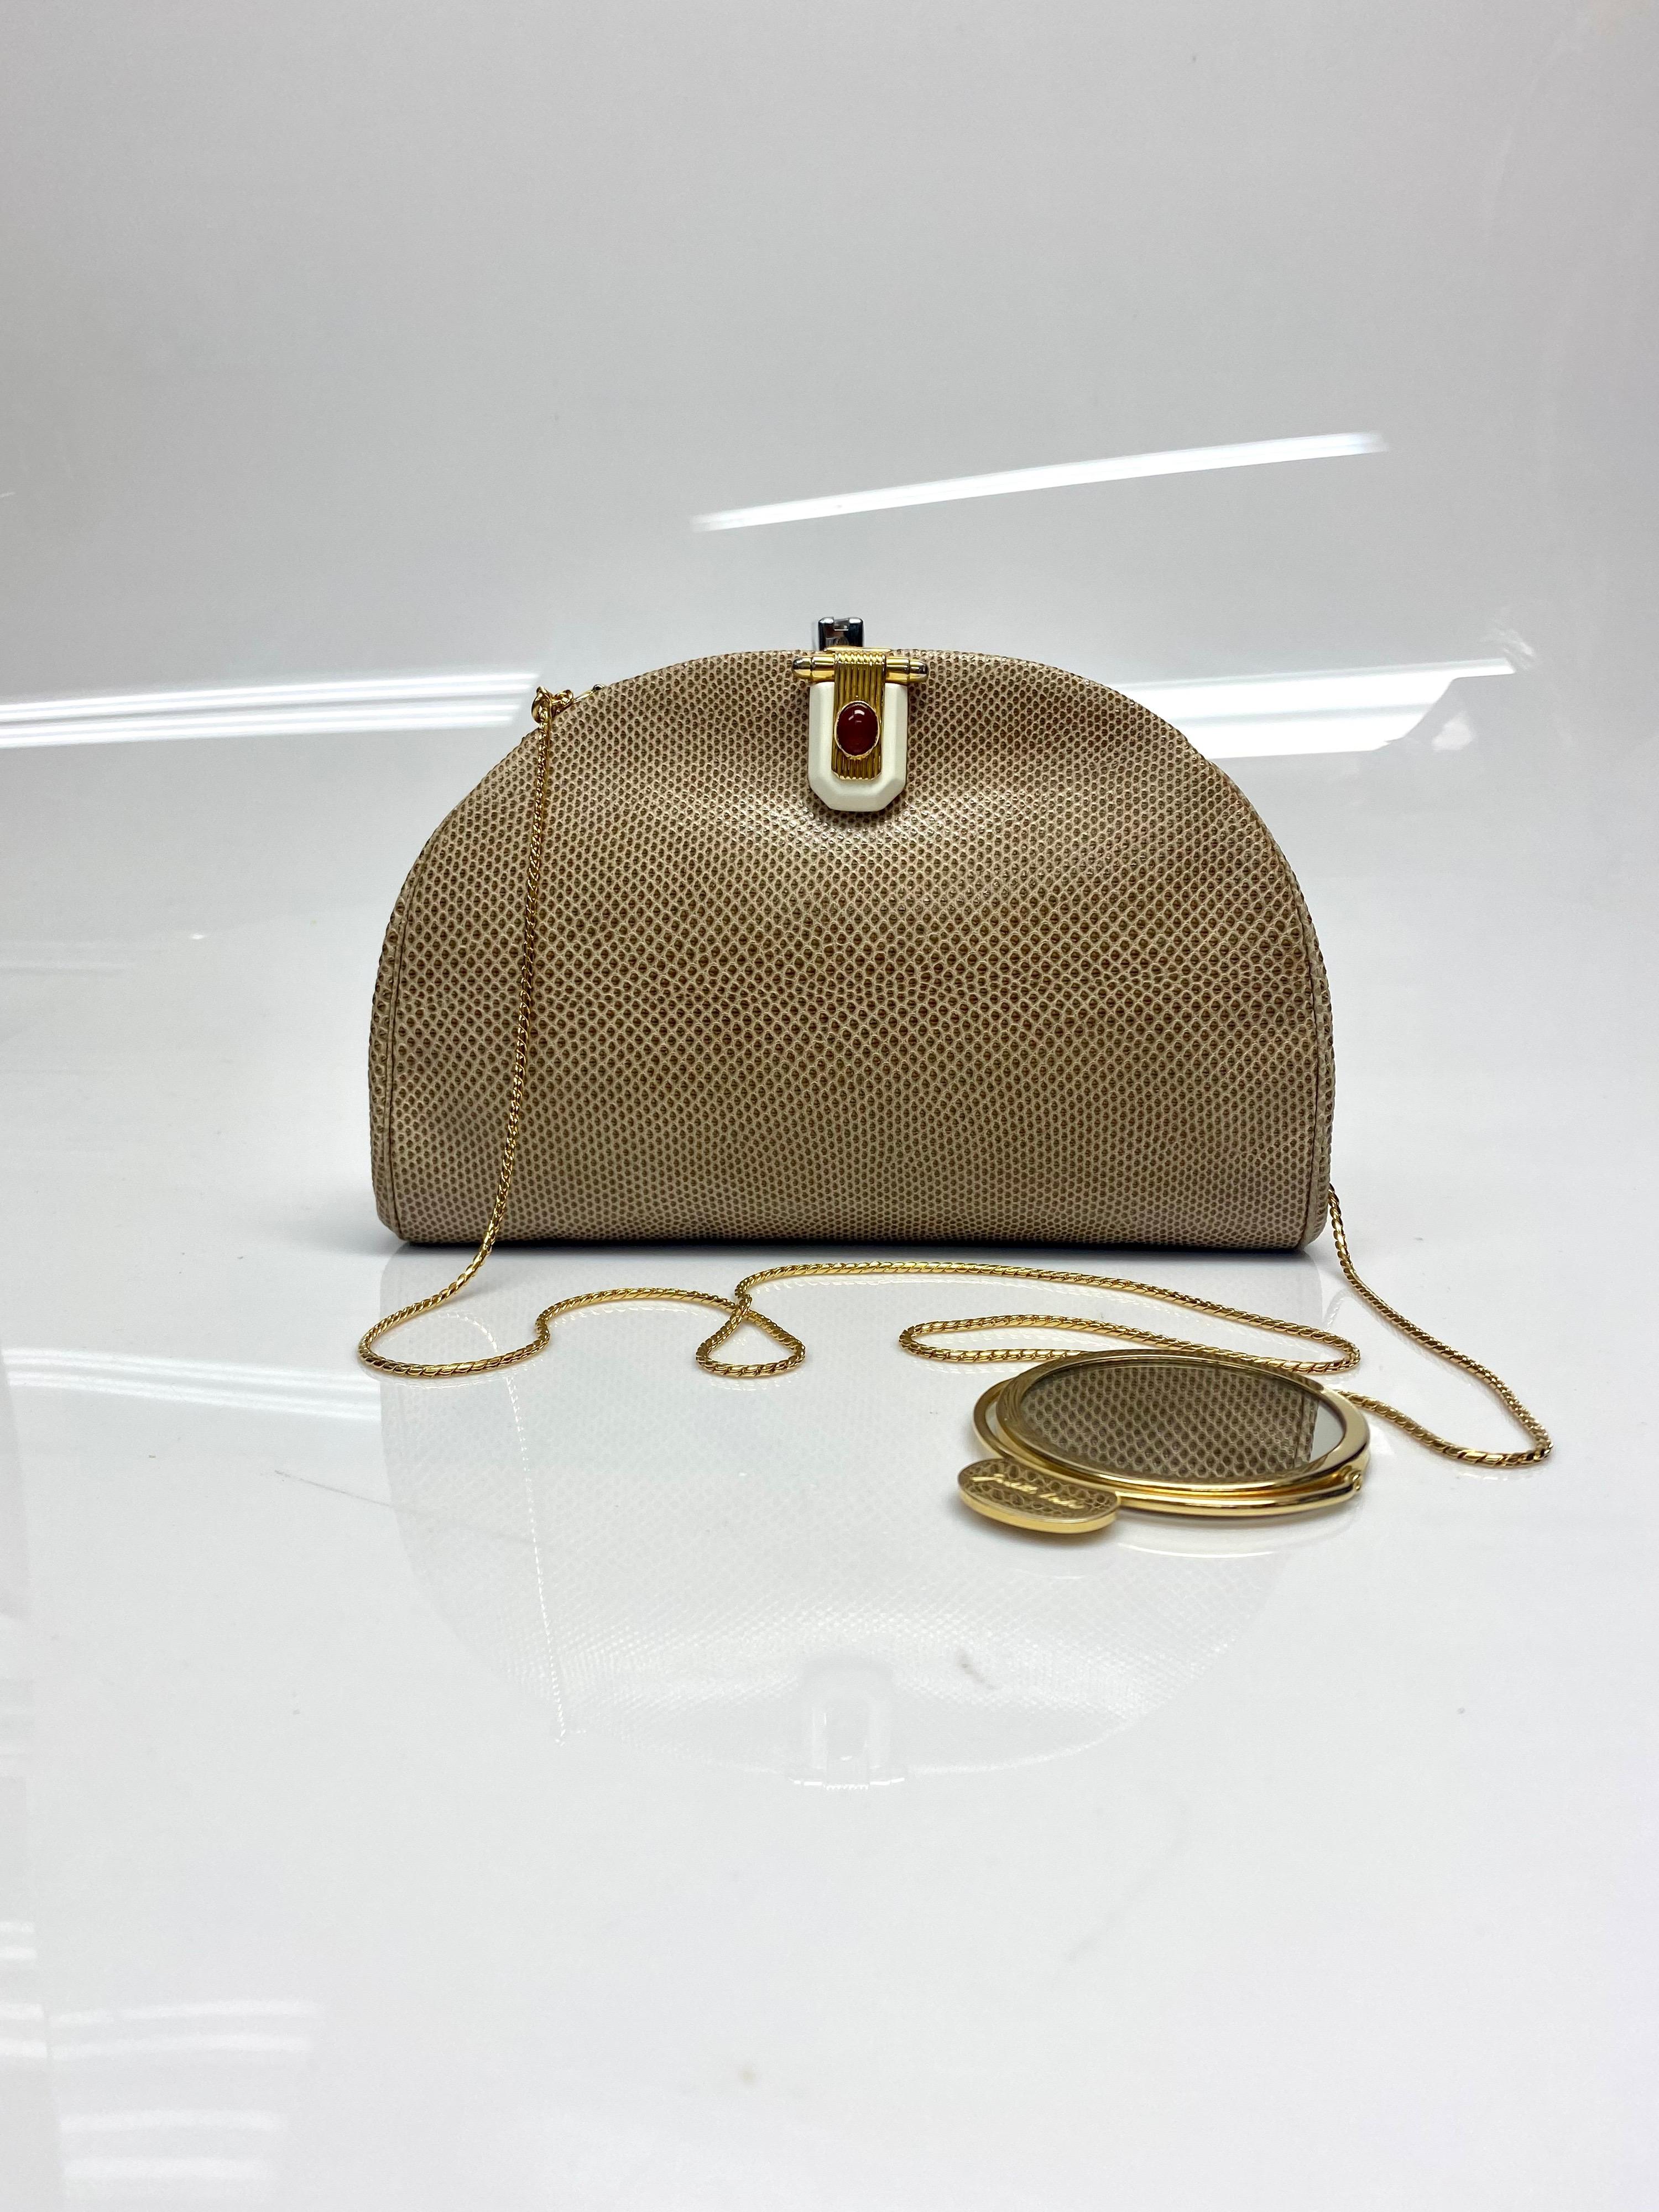 Judith Leiber Tan Karung Snake Handbag with Stone Buckle Front.  For Sale 2